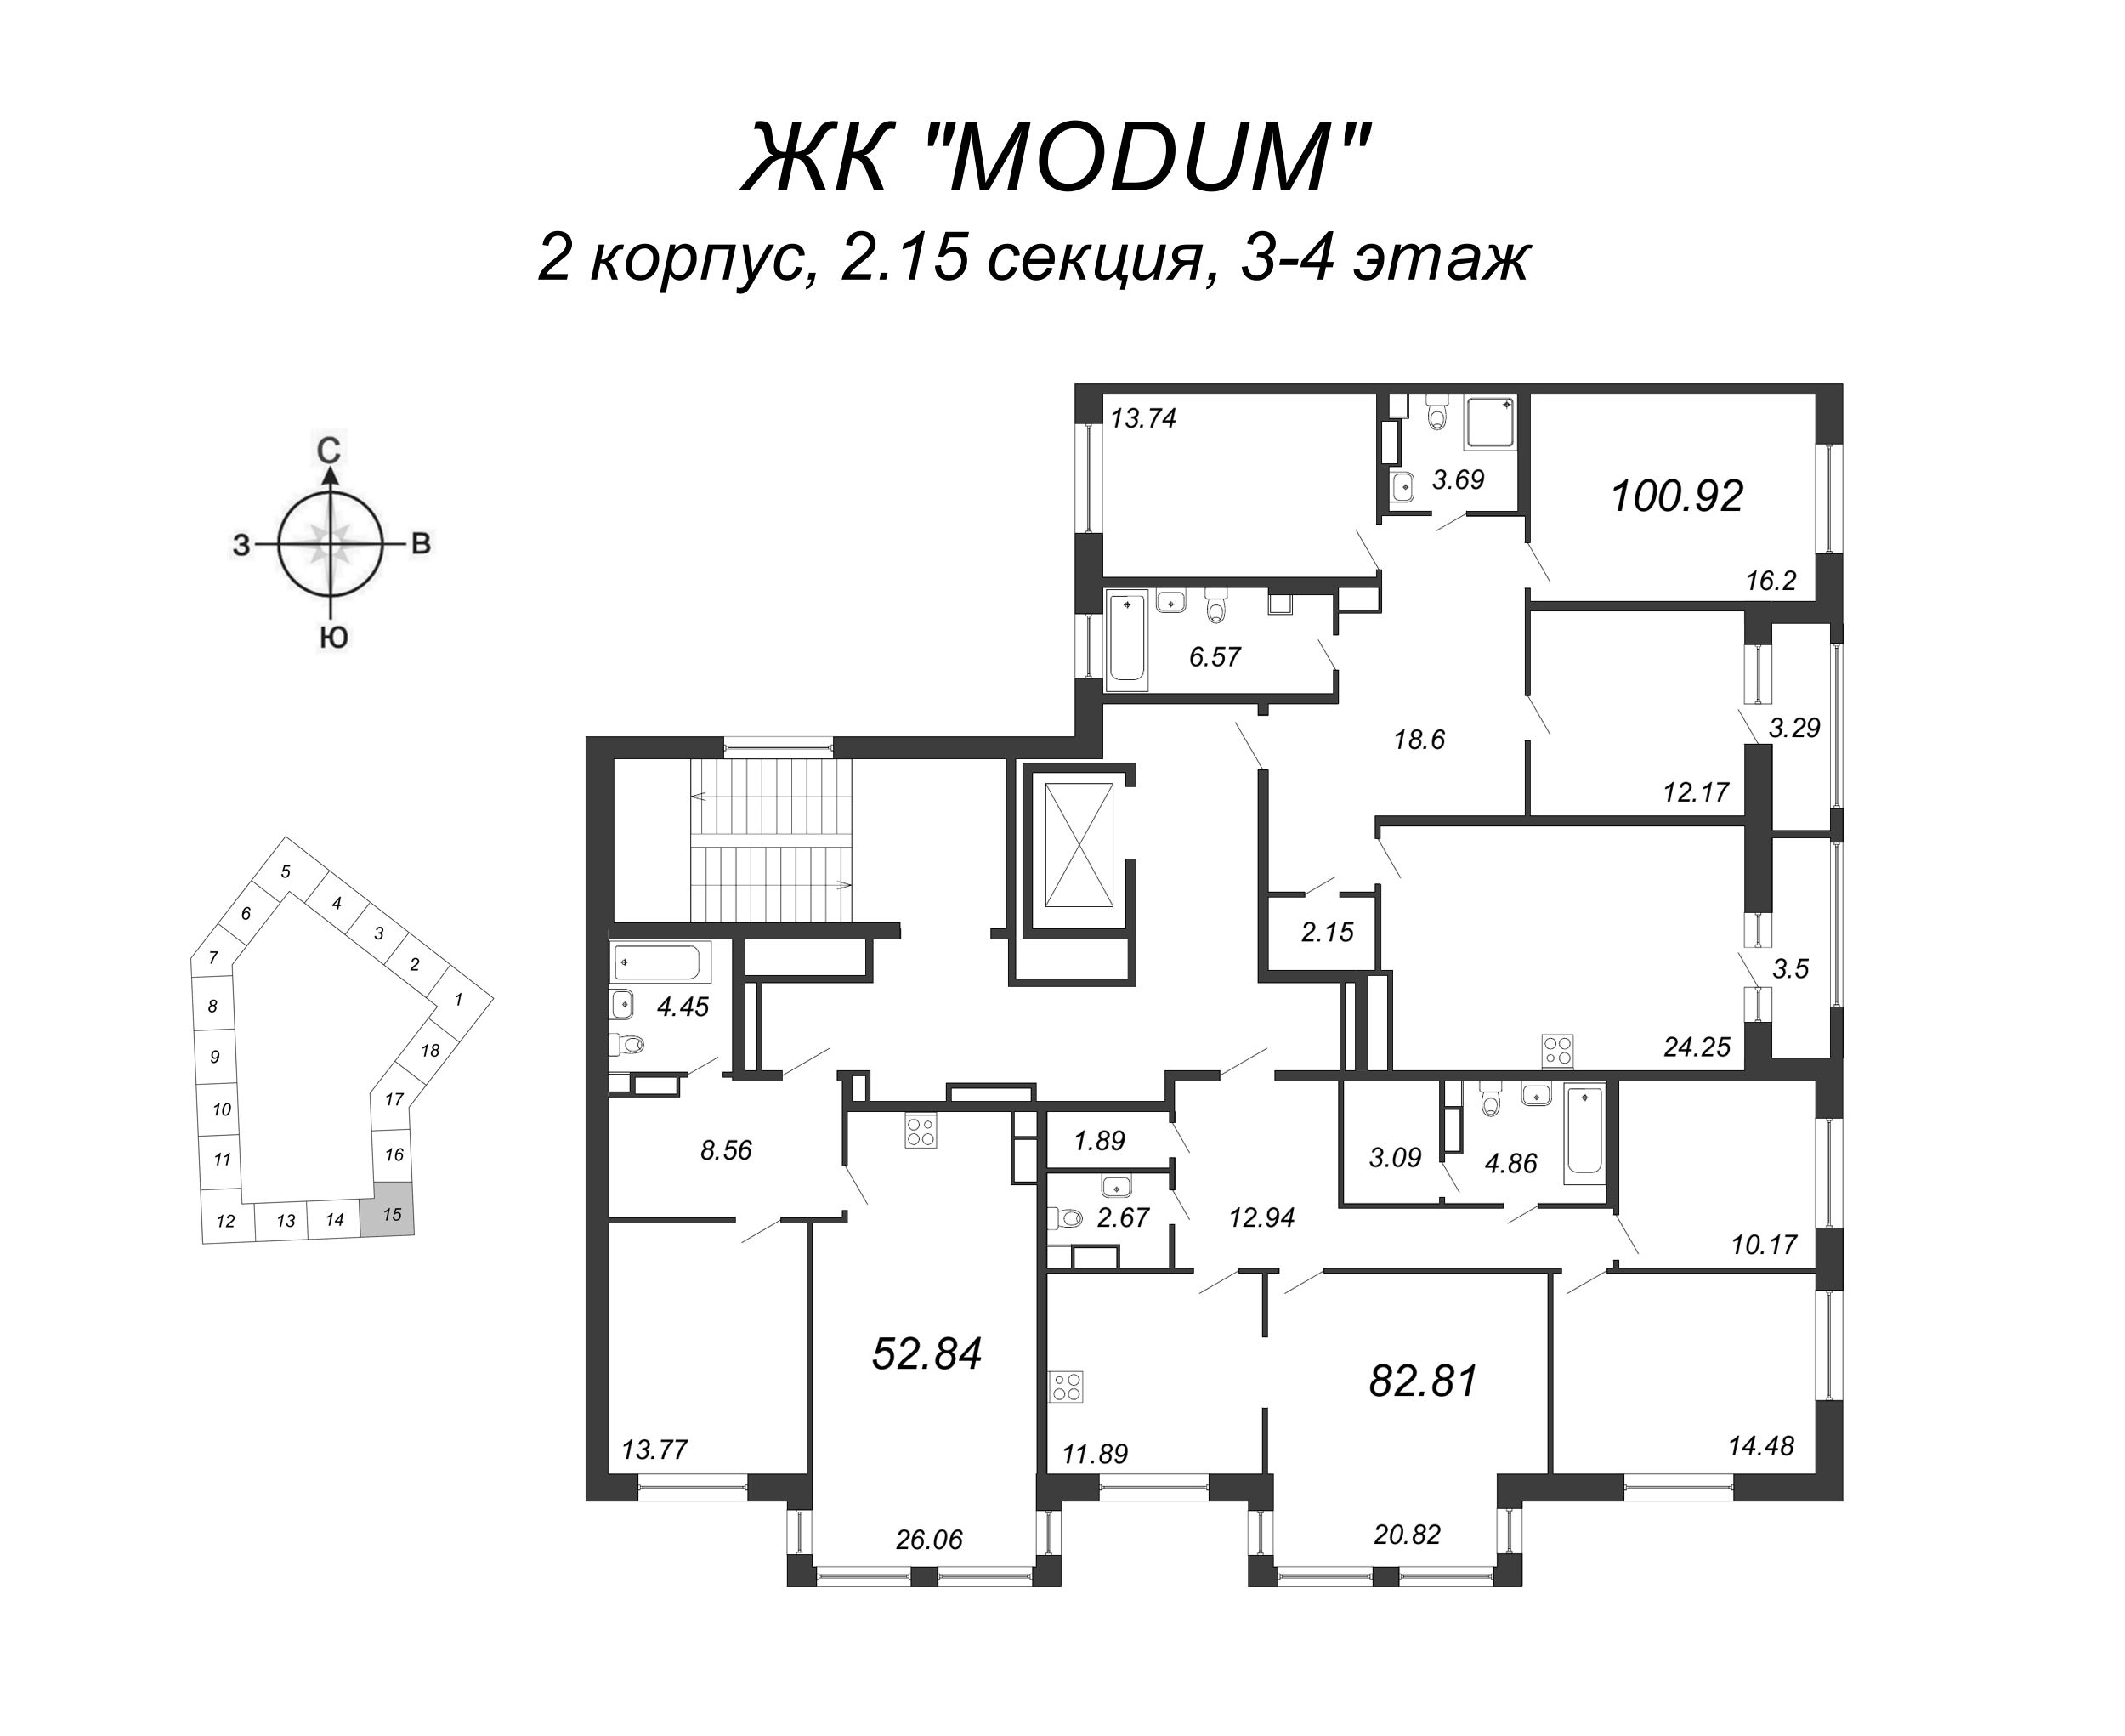 2-комнатная (Евро) квартира, 52.84 м² - планировка этажа